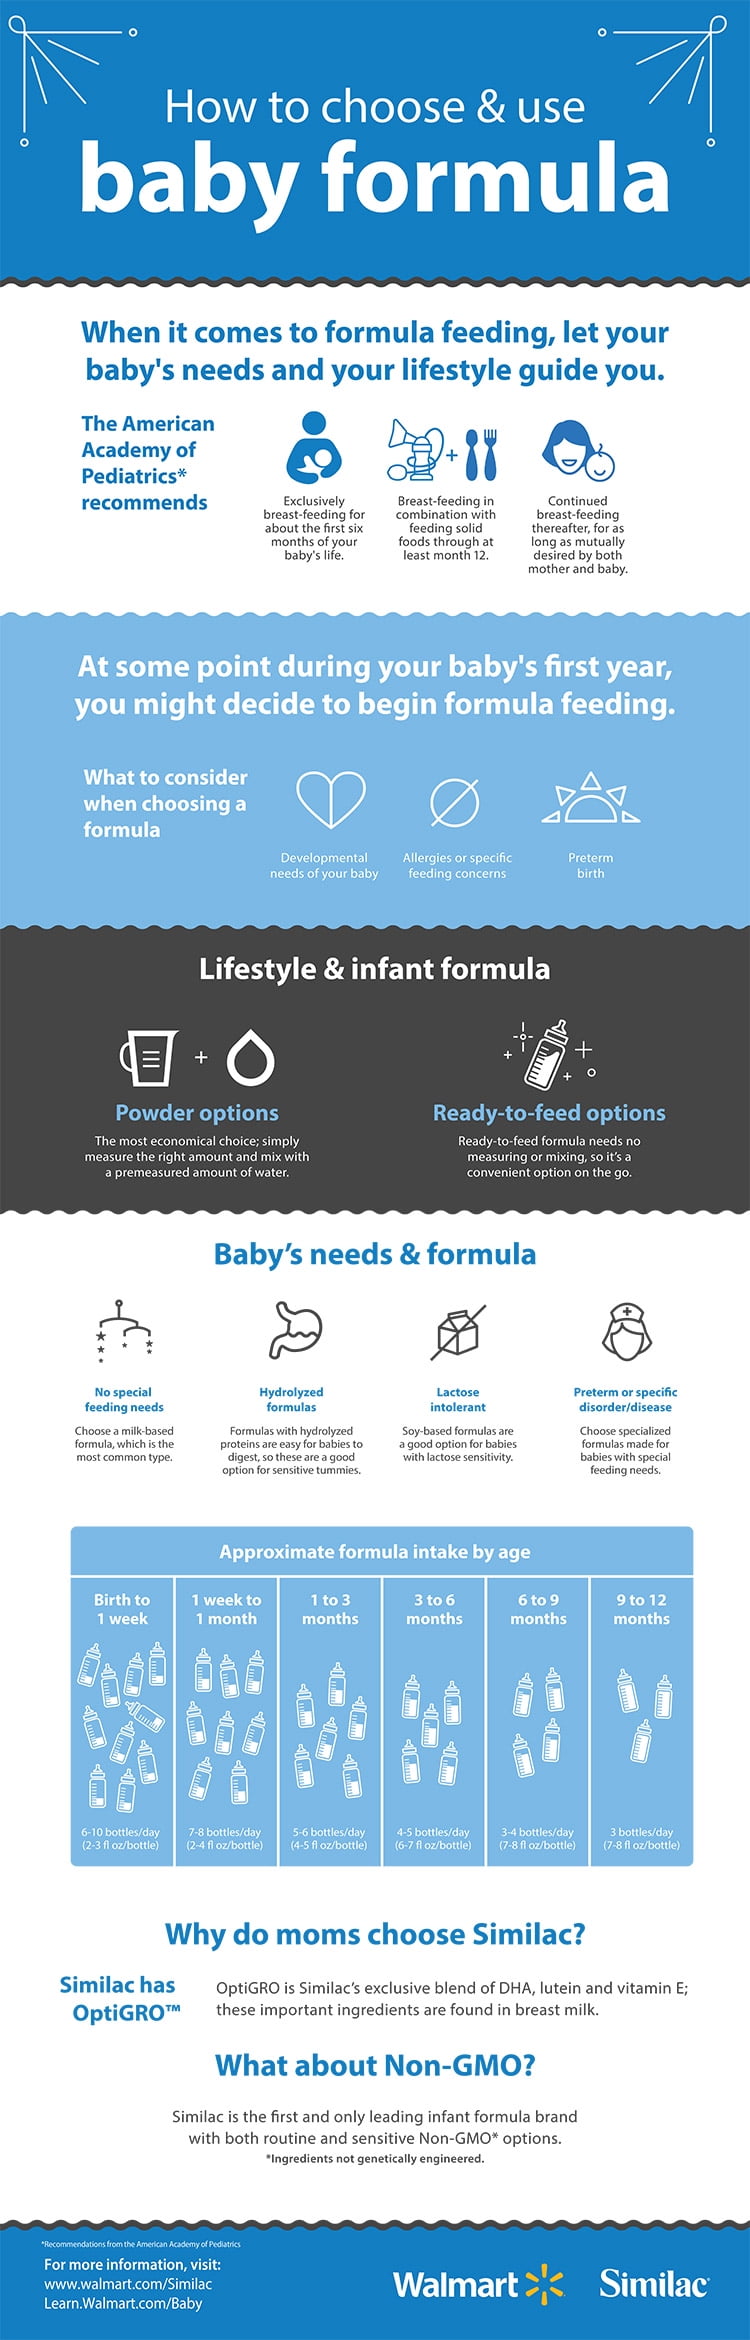 How to Choose & Use Baby Formula - Walmart.com